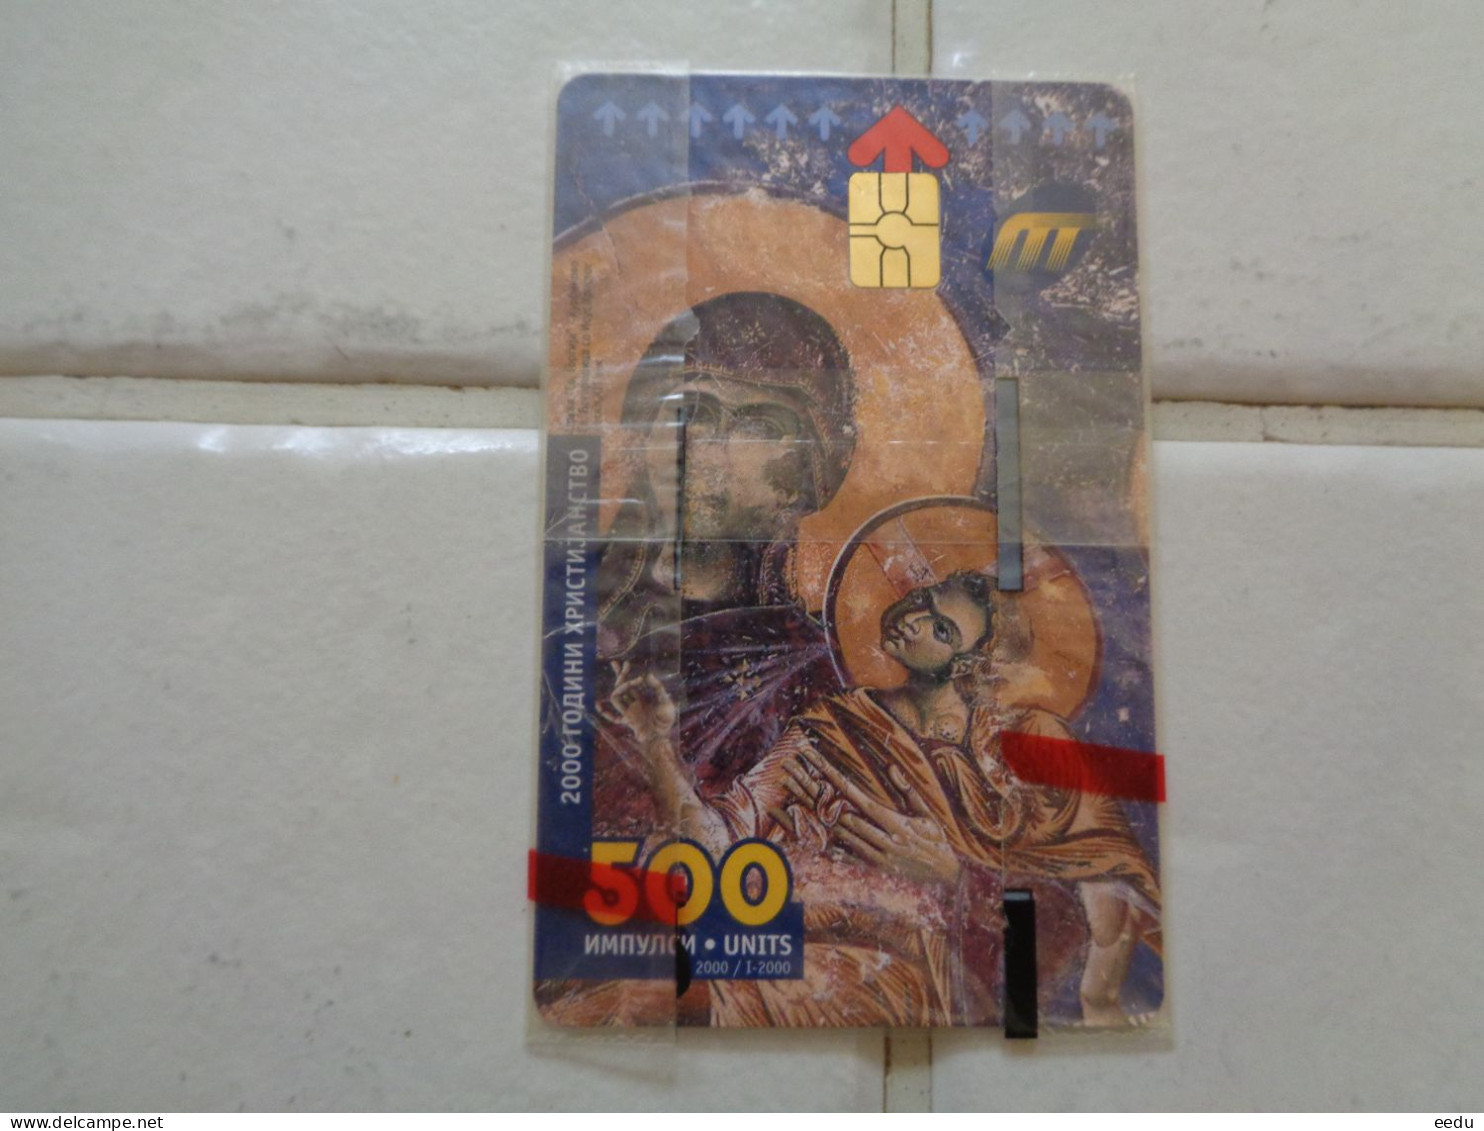 Macedonia Phonecard ( Mint In Blister ) - Noord-Macedonië